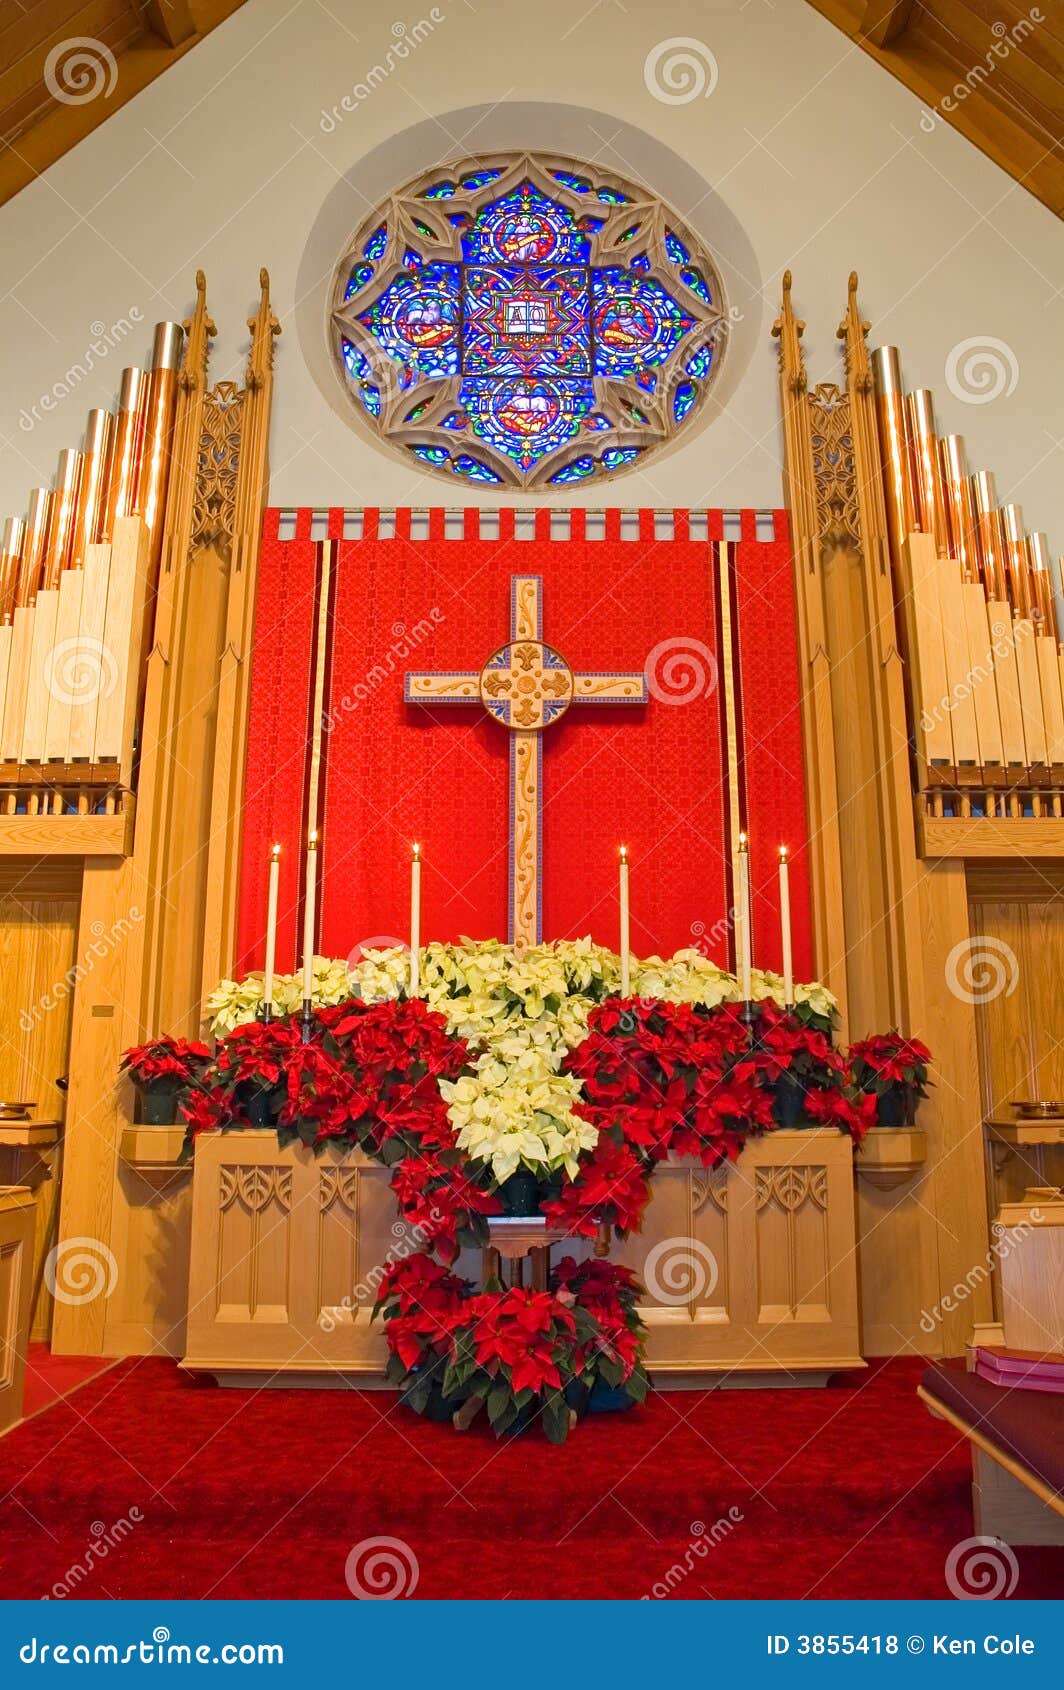 Church Altar With Poinsettias Stock Photo - Image: 3855418